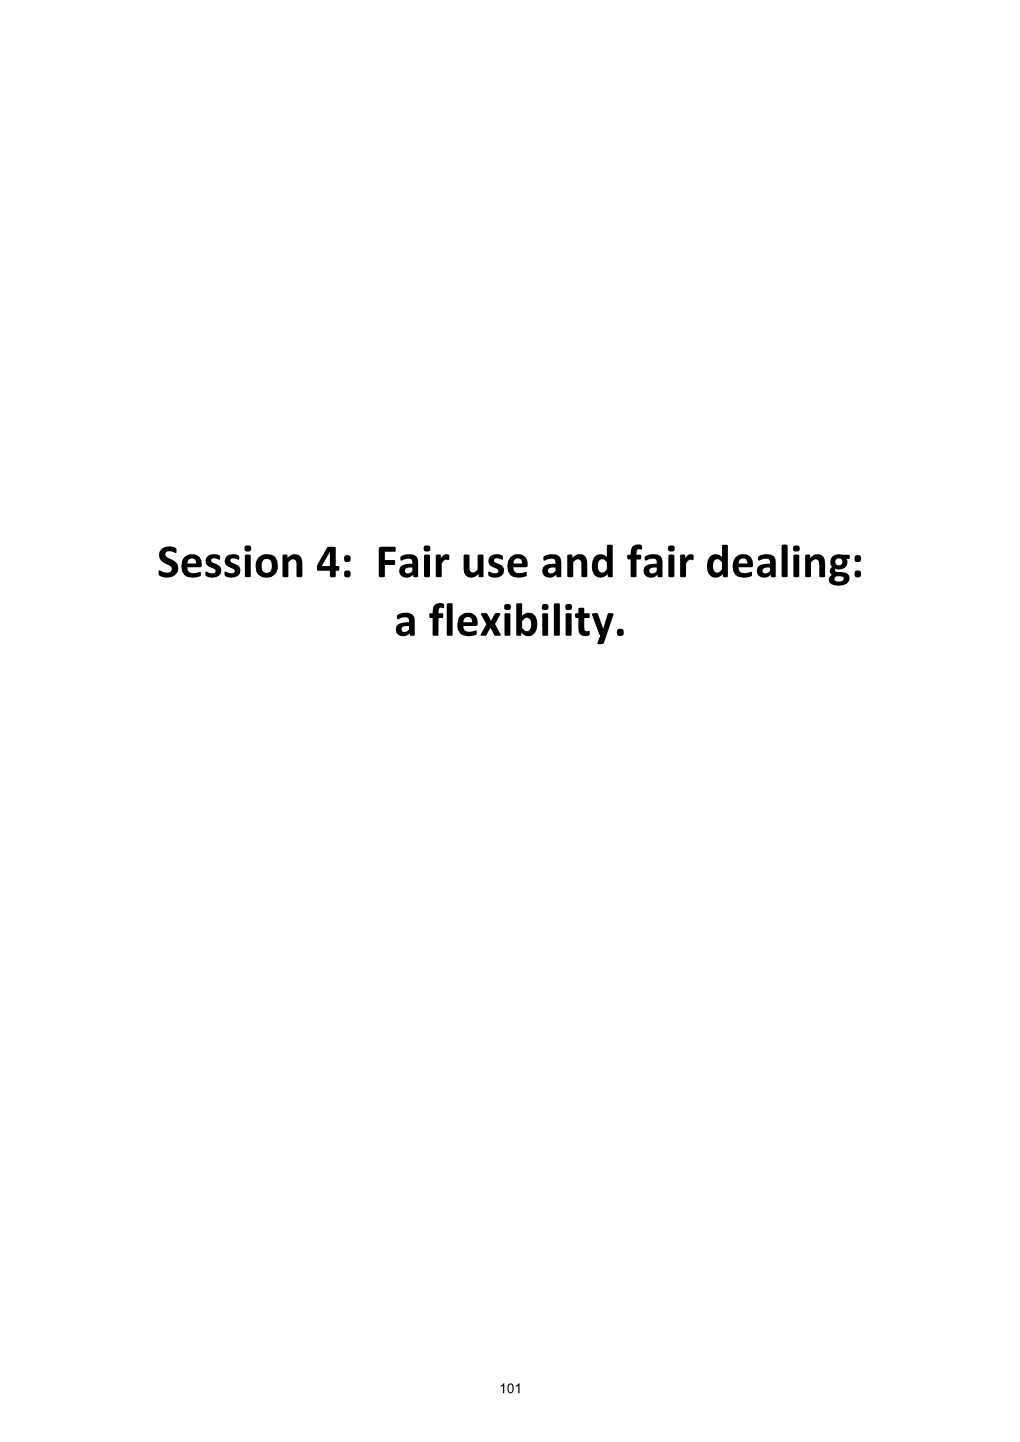 Session 4: Fair Use and Fair Dealing: a Flexibility